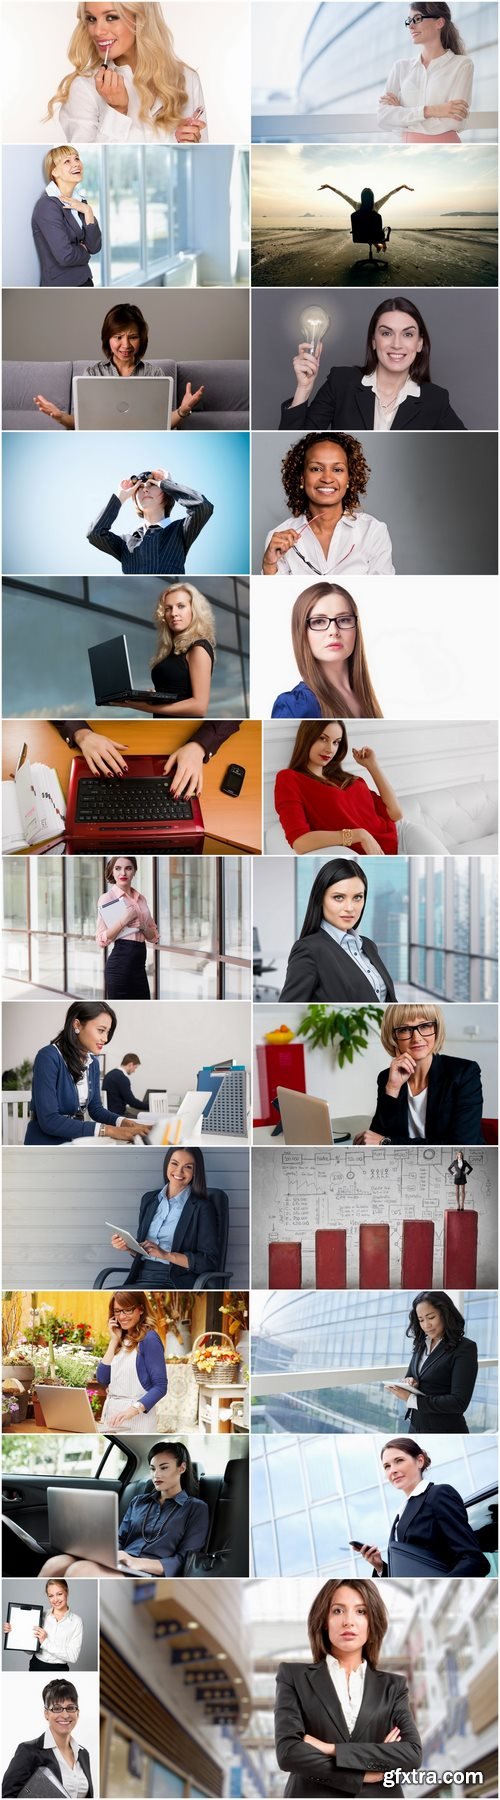 Business woman female girl business suit laptop 2-25 HQ Jpeg